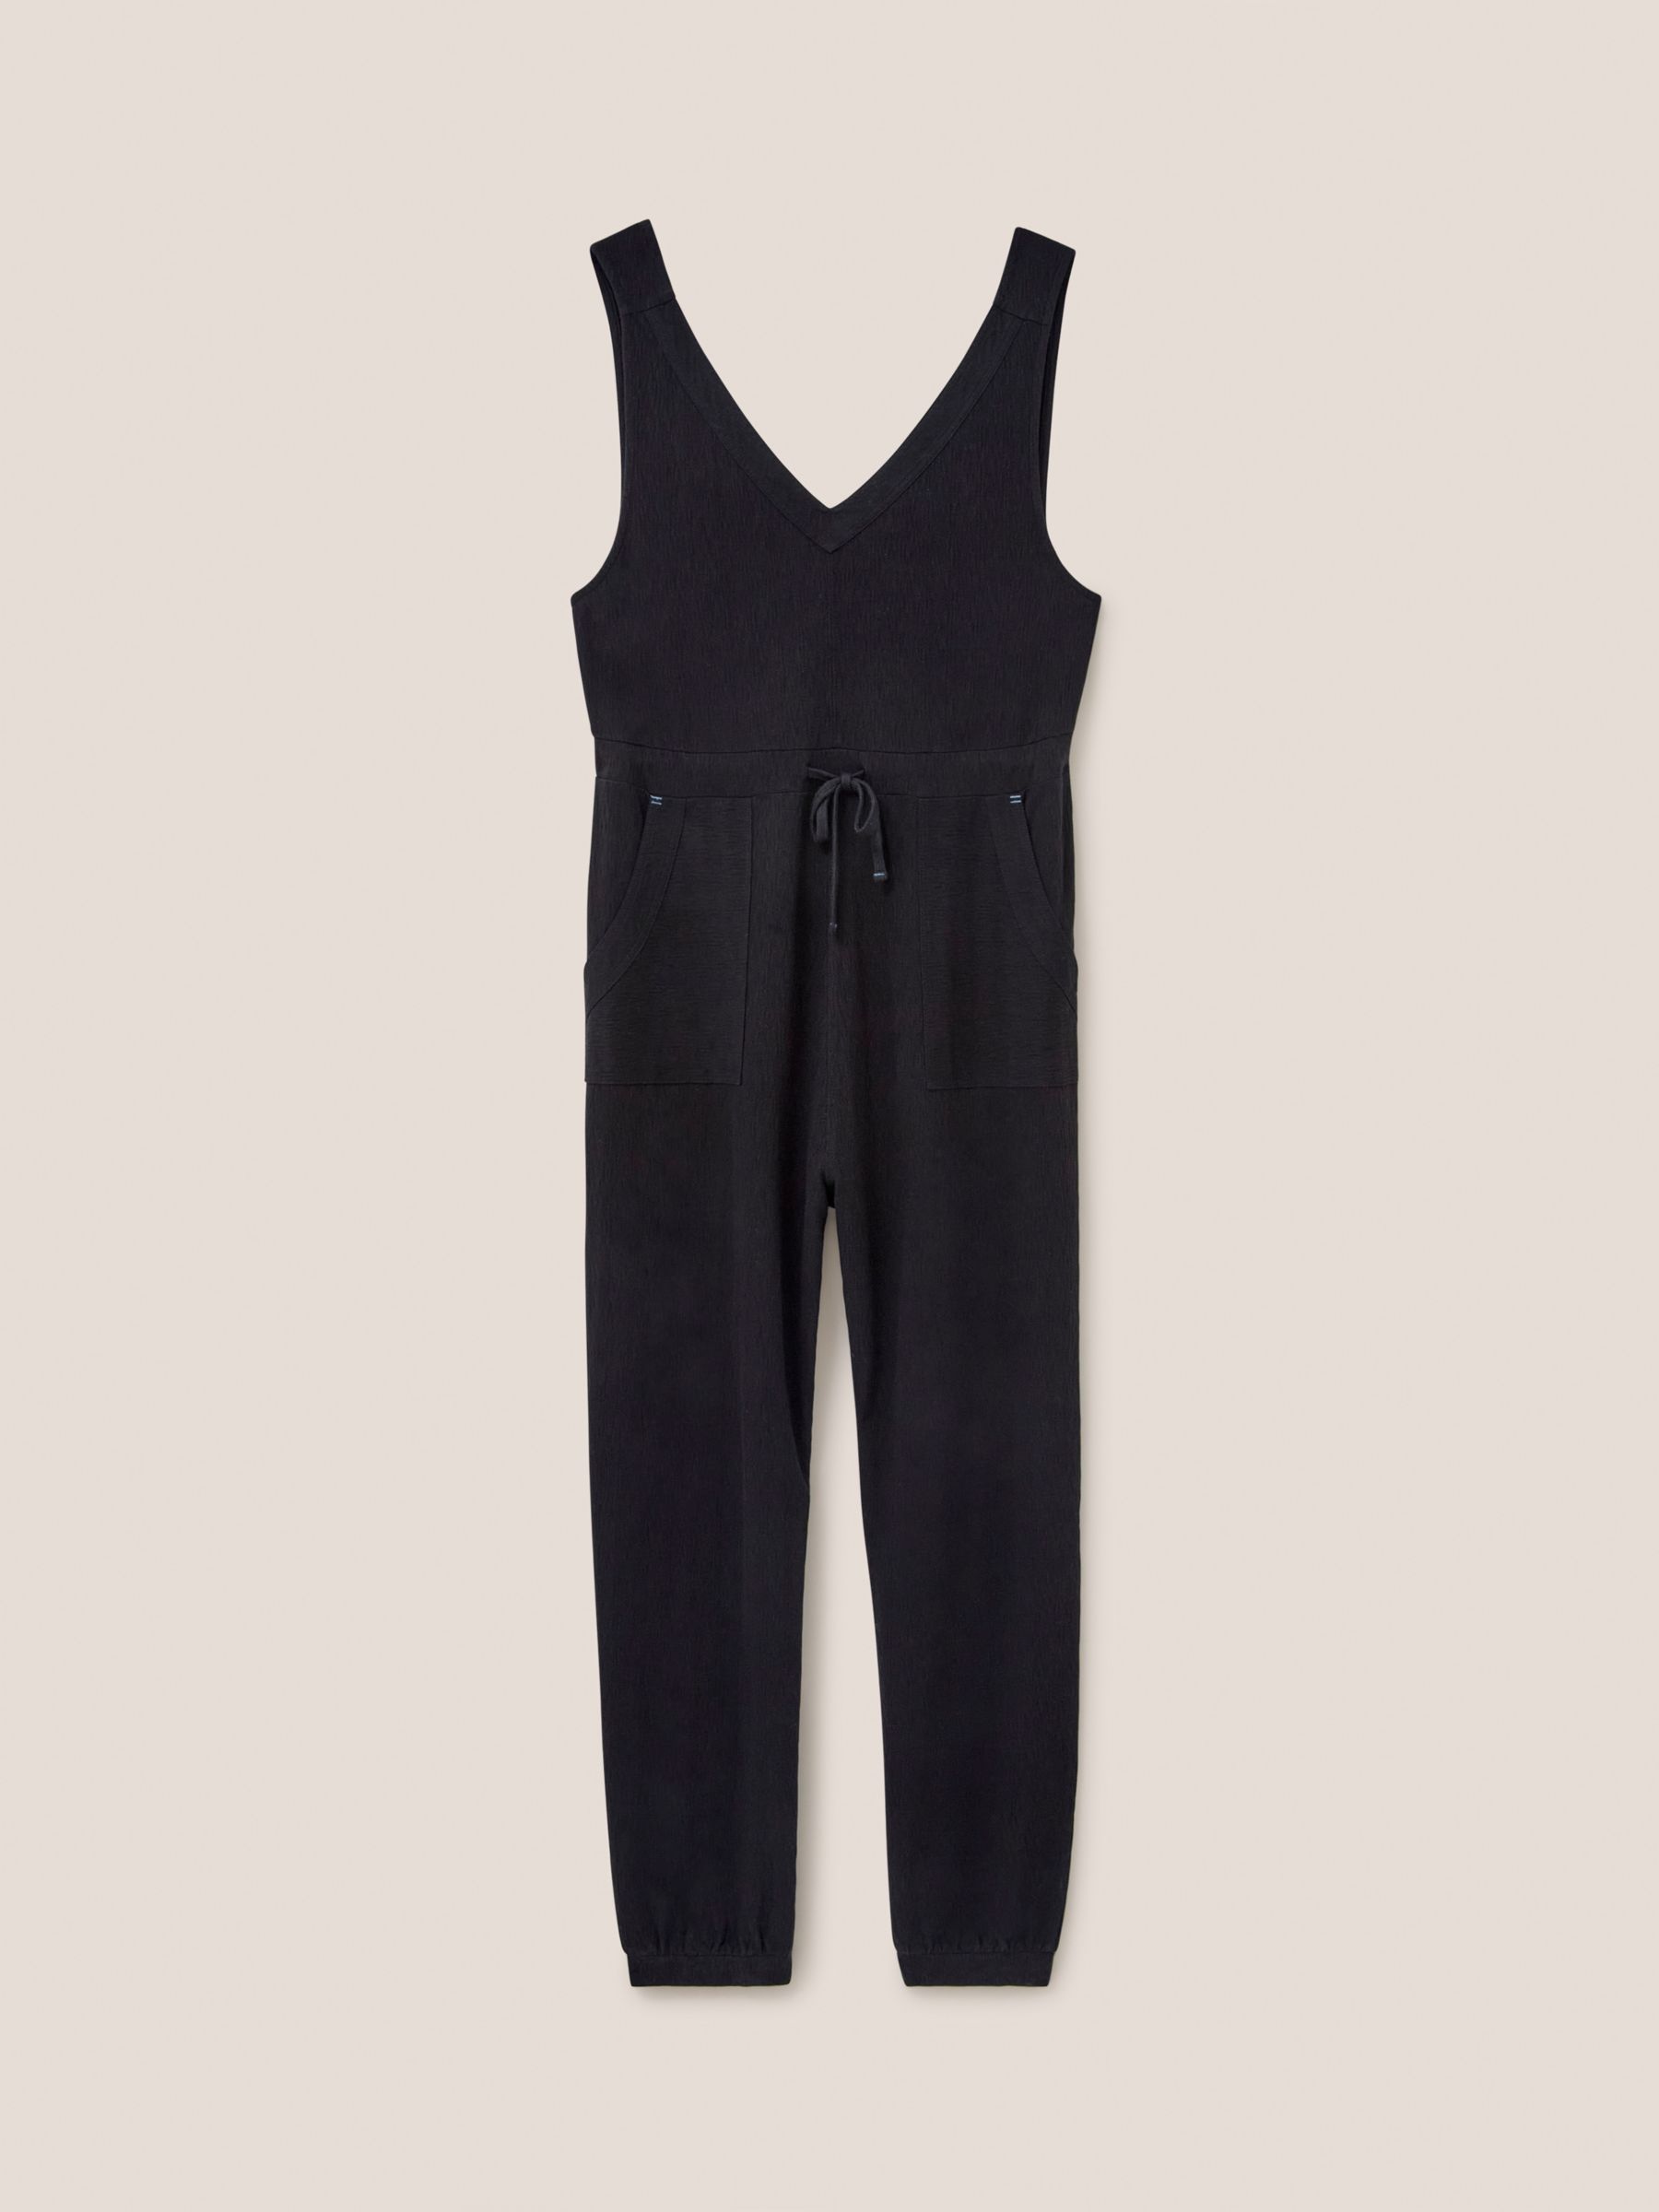 White Stuff Lainey Jersey Jumpsuit, Pure Black at John Lewis & Partners